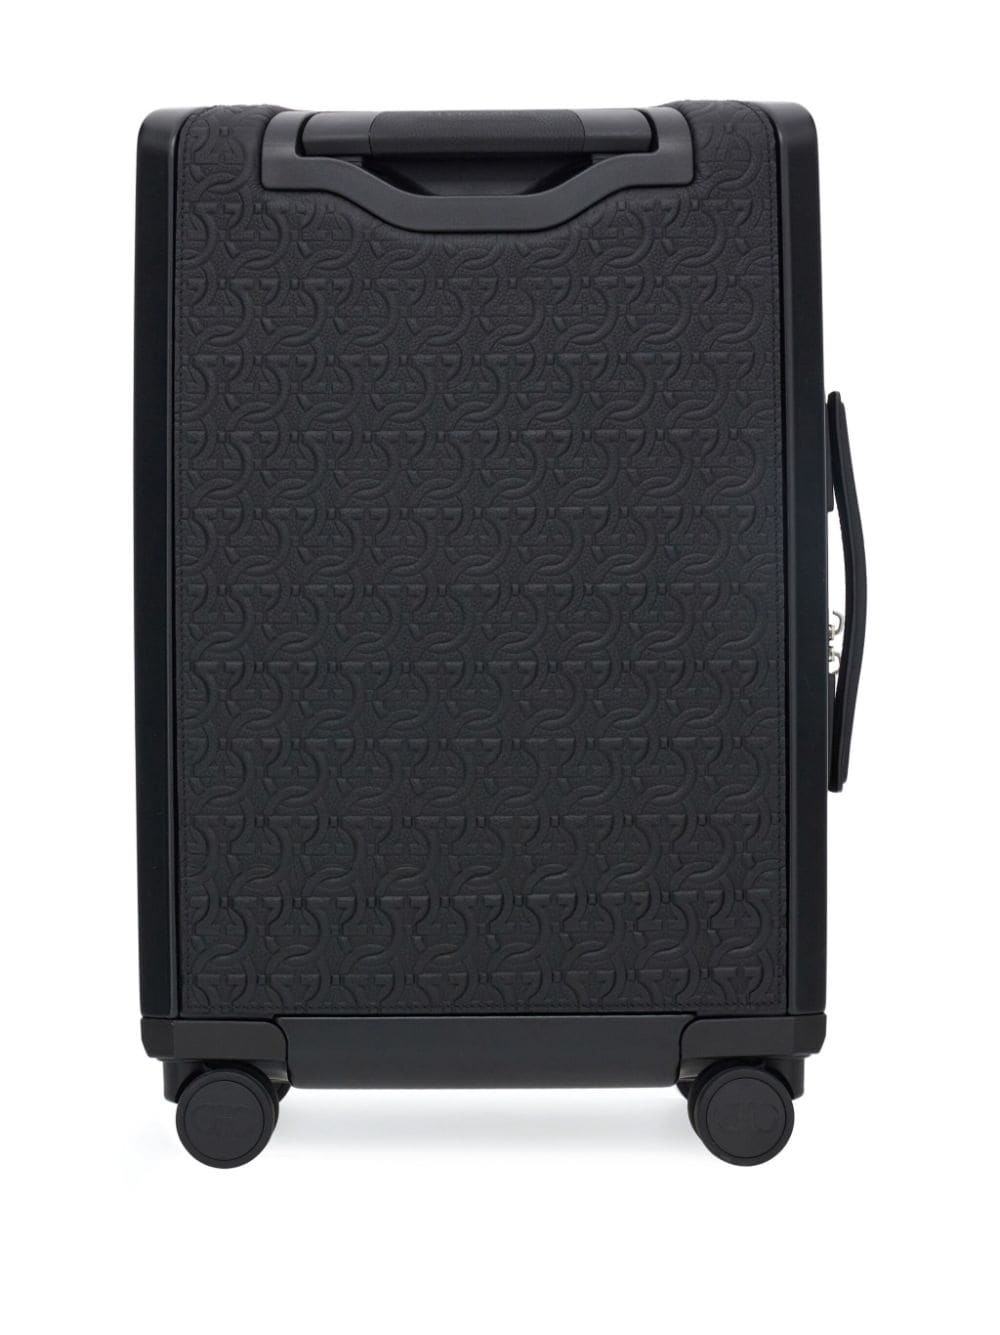 Gancio embossed pattern leather luggage - 2